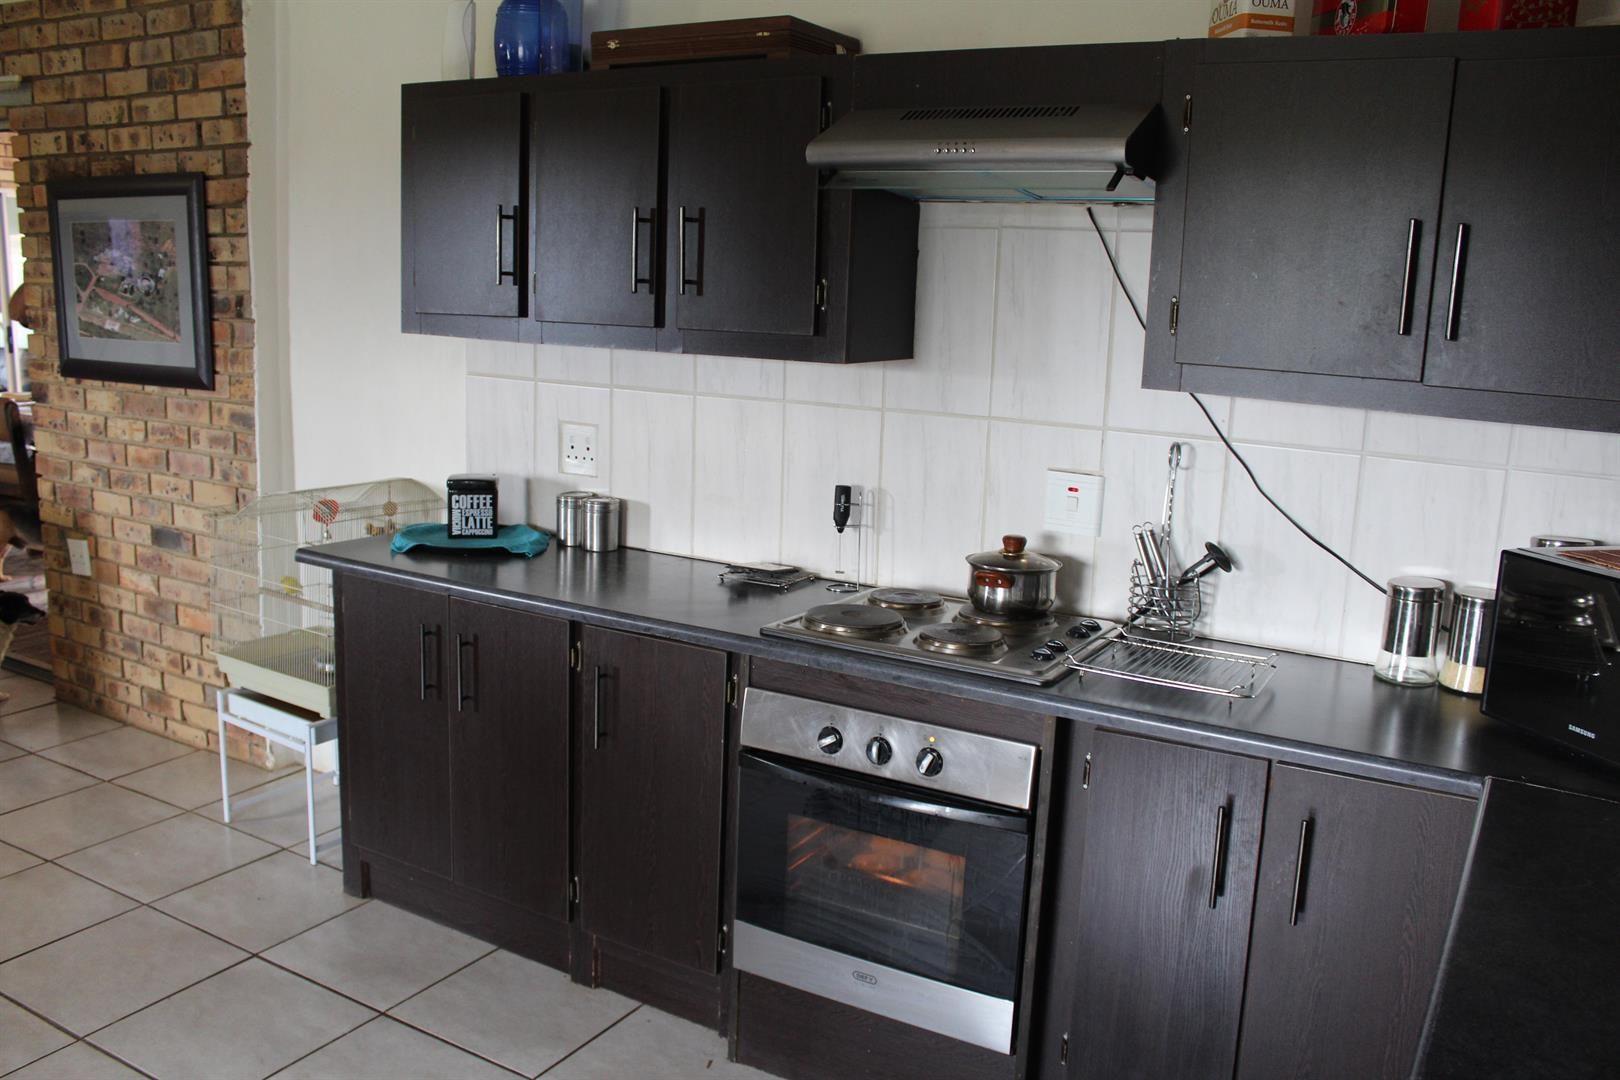  Bedroom Property for Sale in Potchefstroom Rural North West